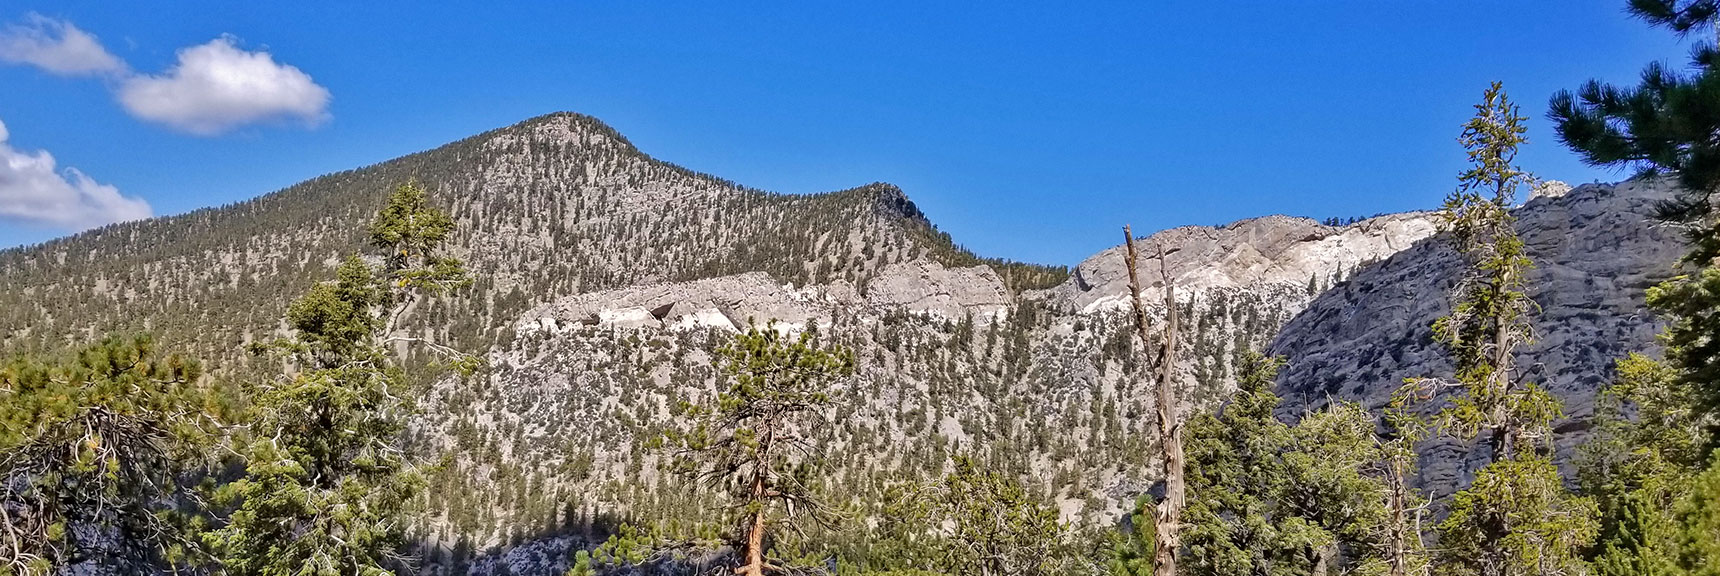 Bonanza Peak Viewed from the Base of McFarland Peak | Bonanza Peak from Lee Canyon via the Lower Bristlecone Pine Trail and Bonanza Trail | Spring Mountains, Nevada